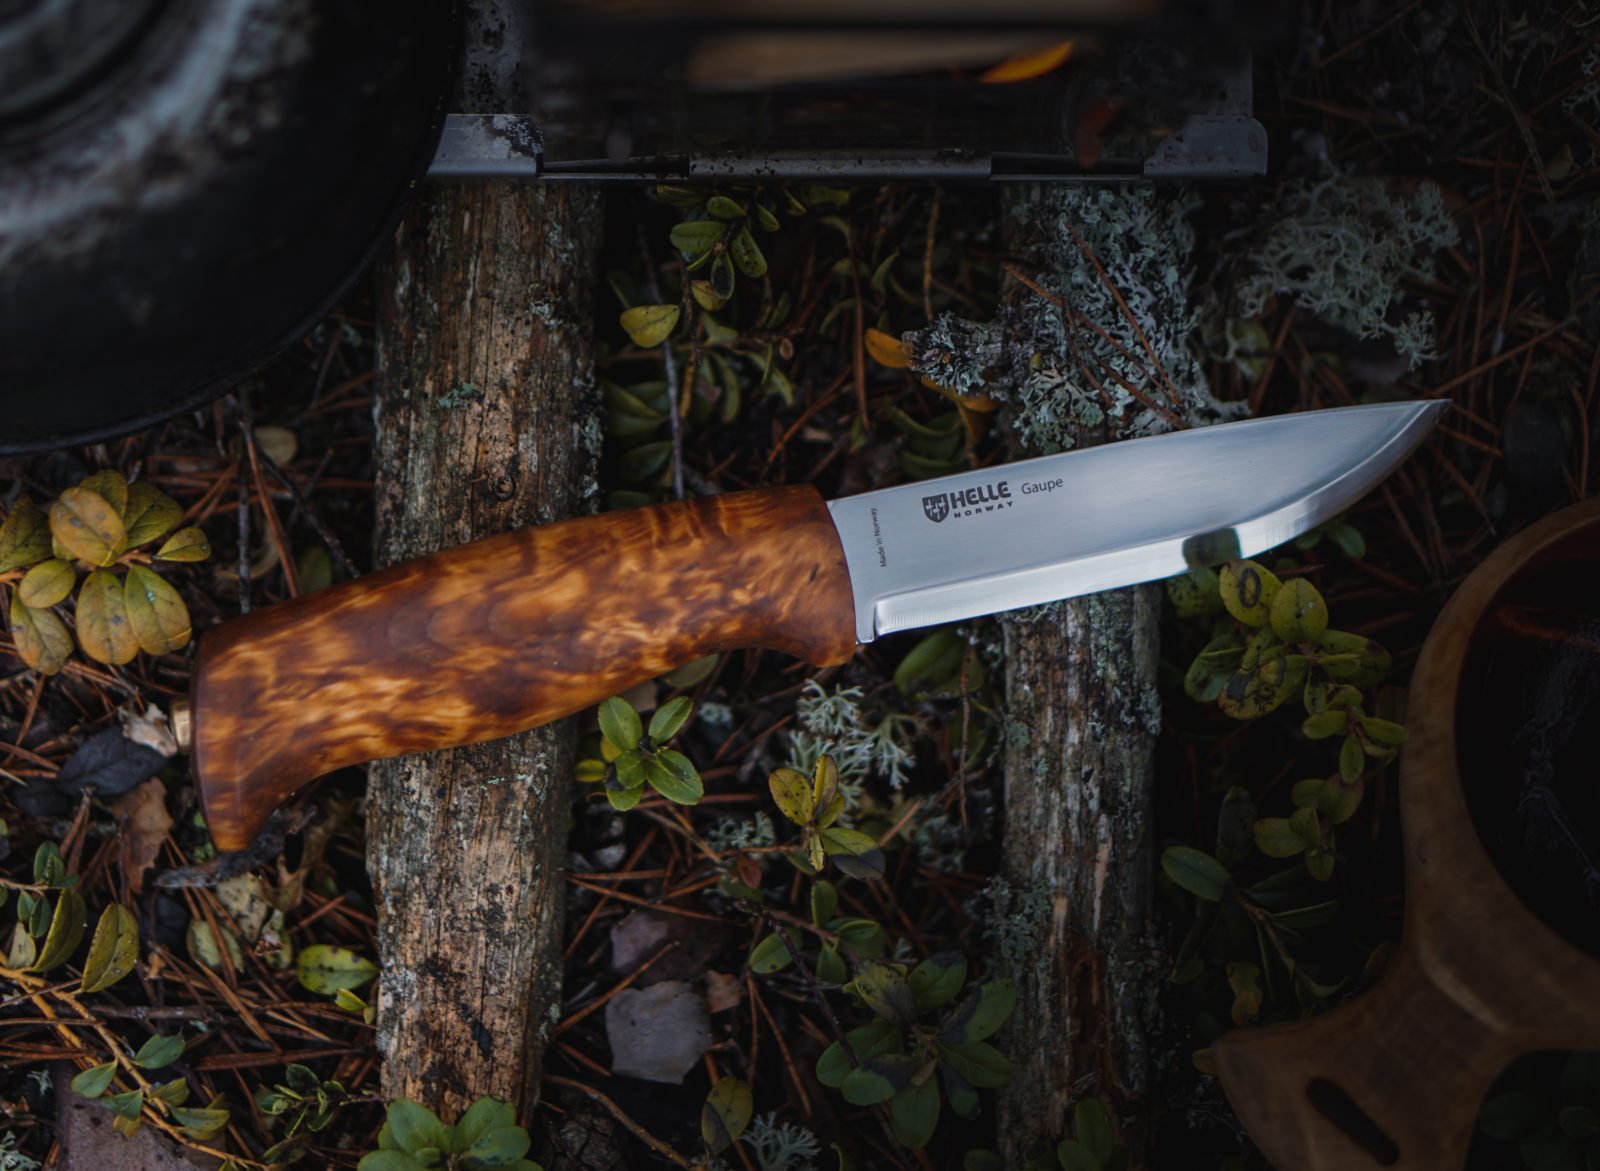 Helle Knives Gaupe Scandinavian Carving Knife